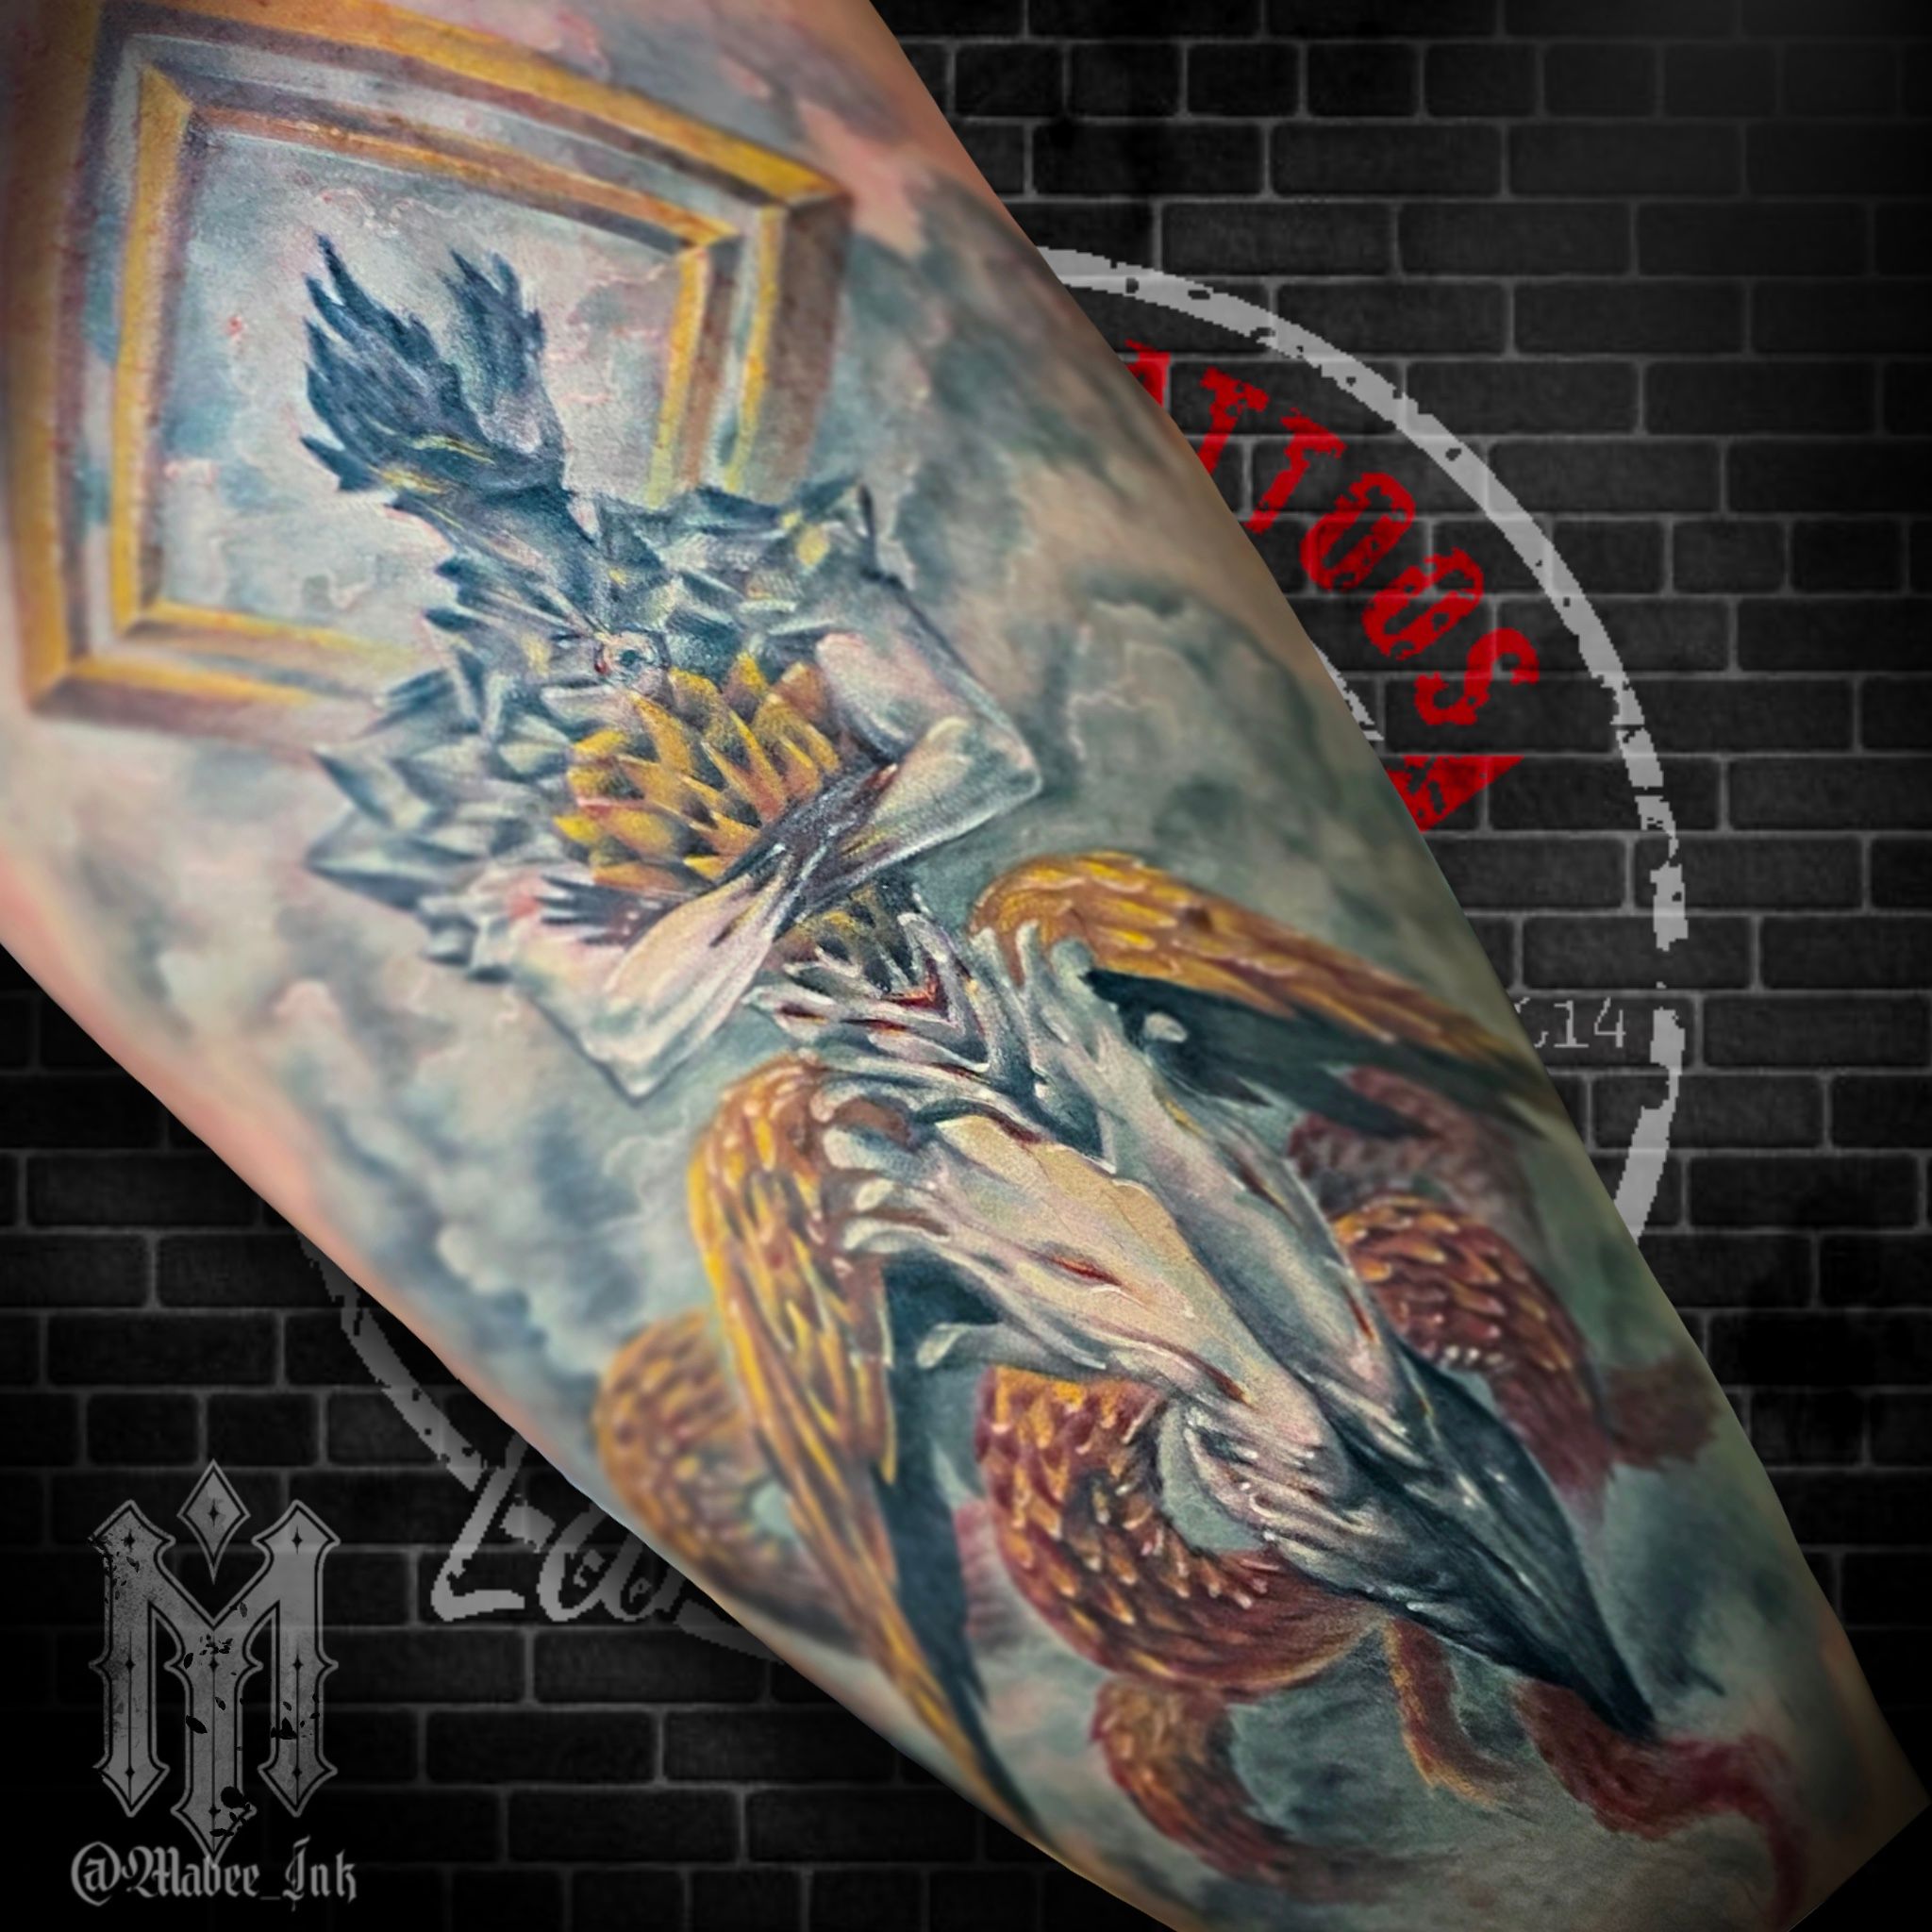 Seraphim Angel Demon Tattoos Waterproof Temporary Tattoo For Woman Men Sexy  Art Fake Tattoo Stickers Lasting Wrist Arm Tattoo  Temporary Tattoos   AliExpress